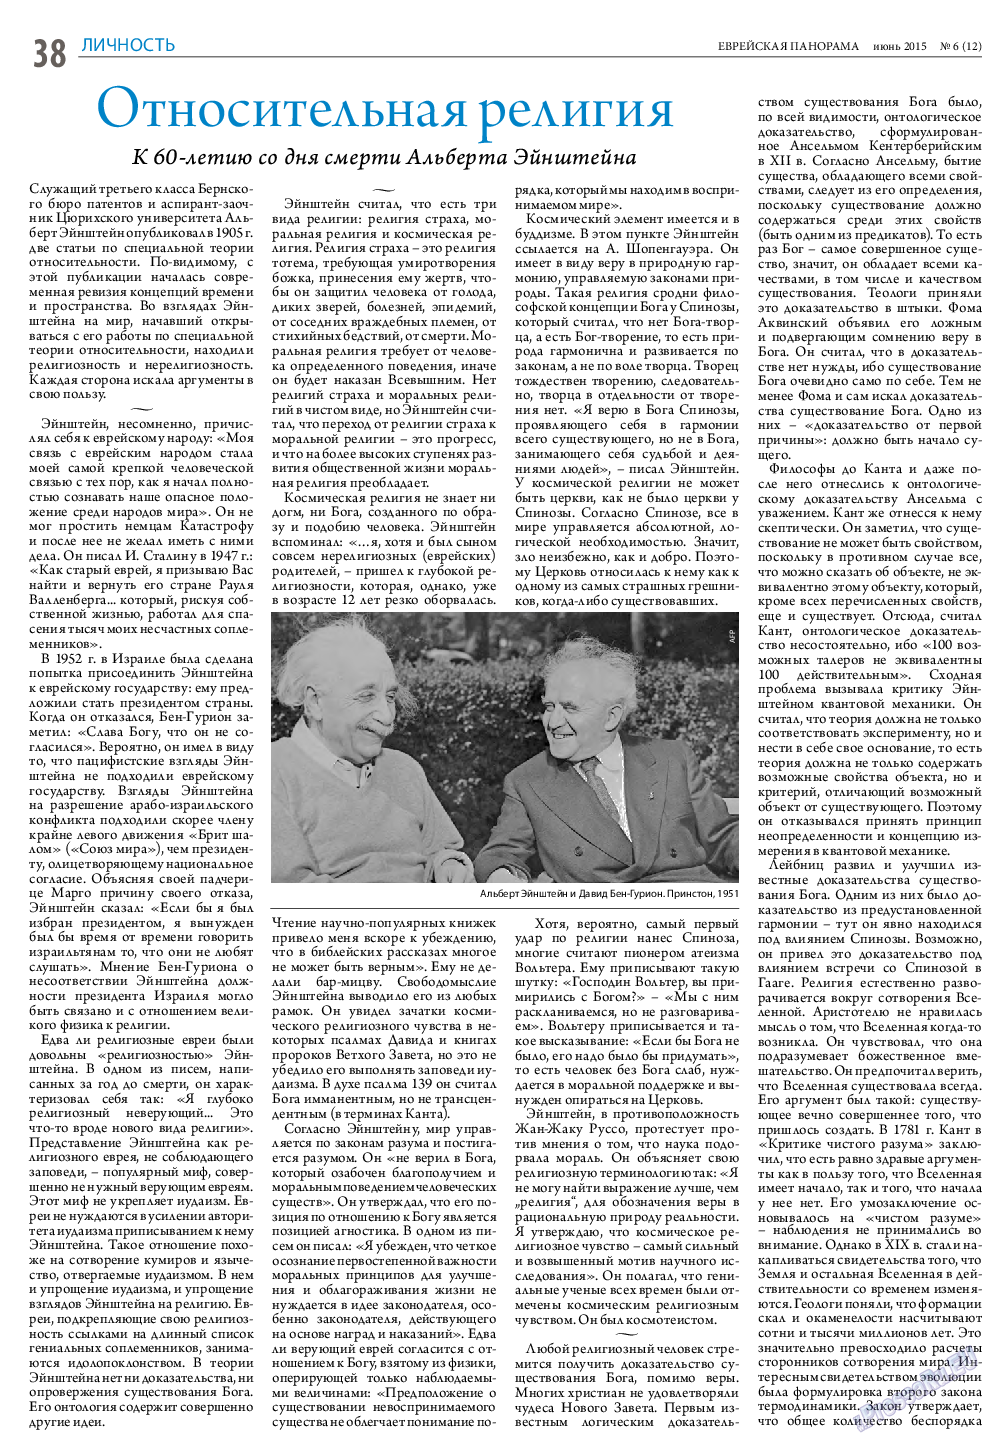 Еврейская панорама, газета. 2015 №6 стр.38